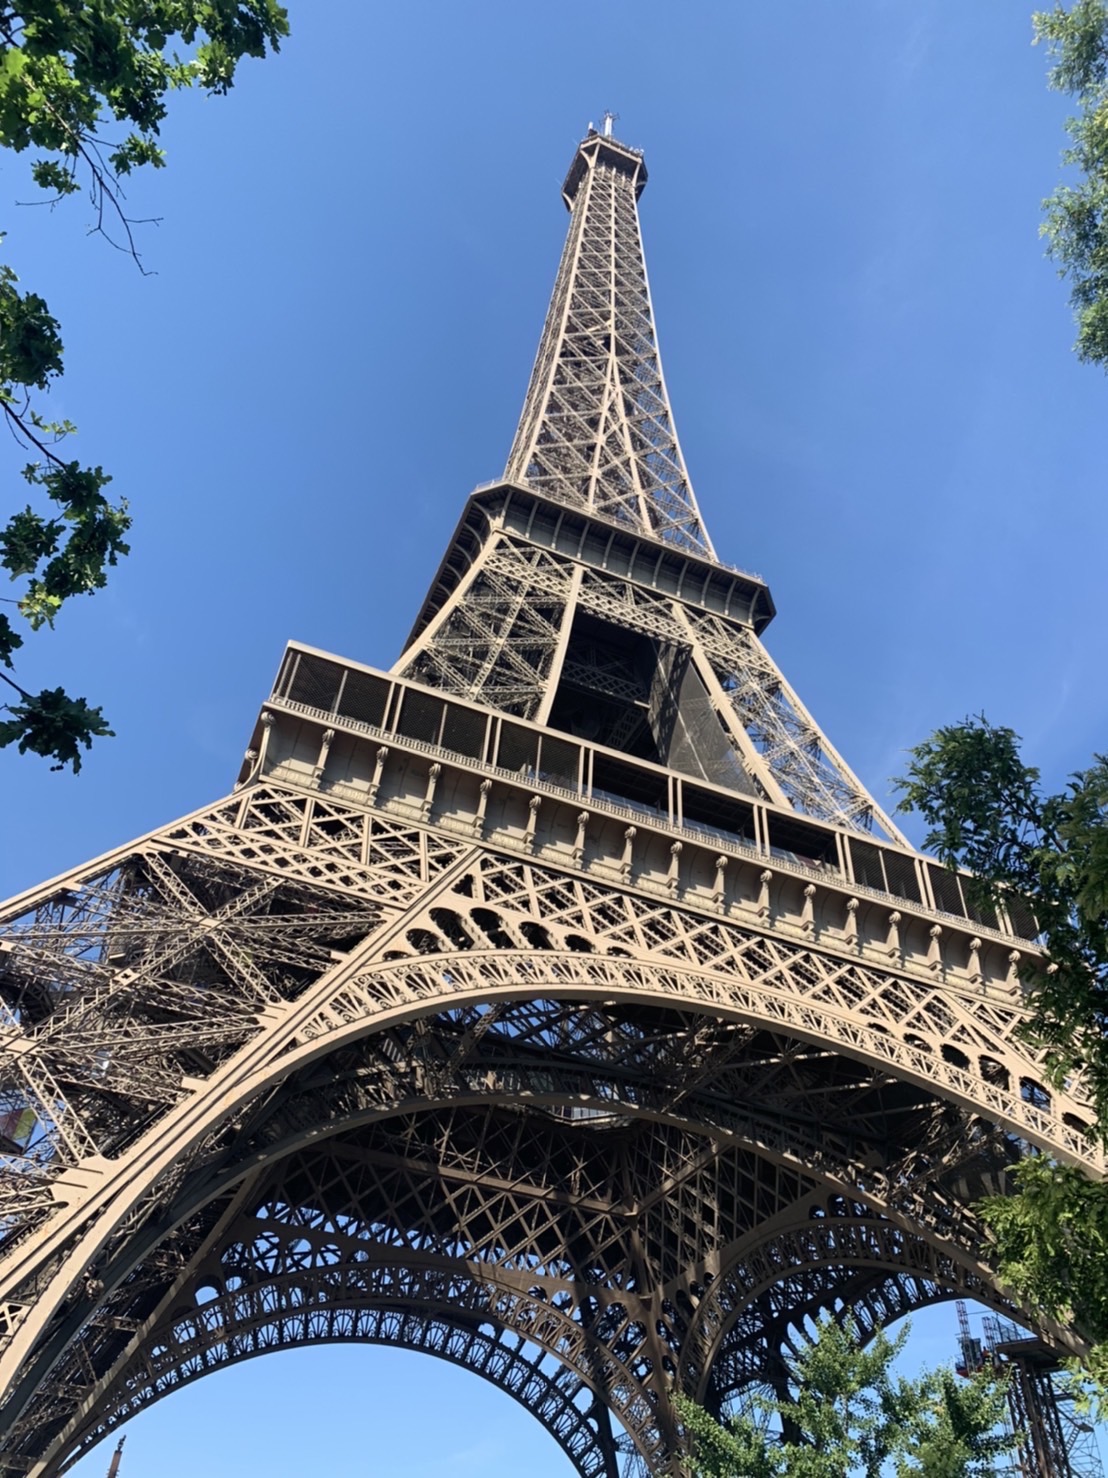 1 La tour Eiffel